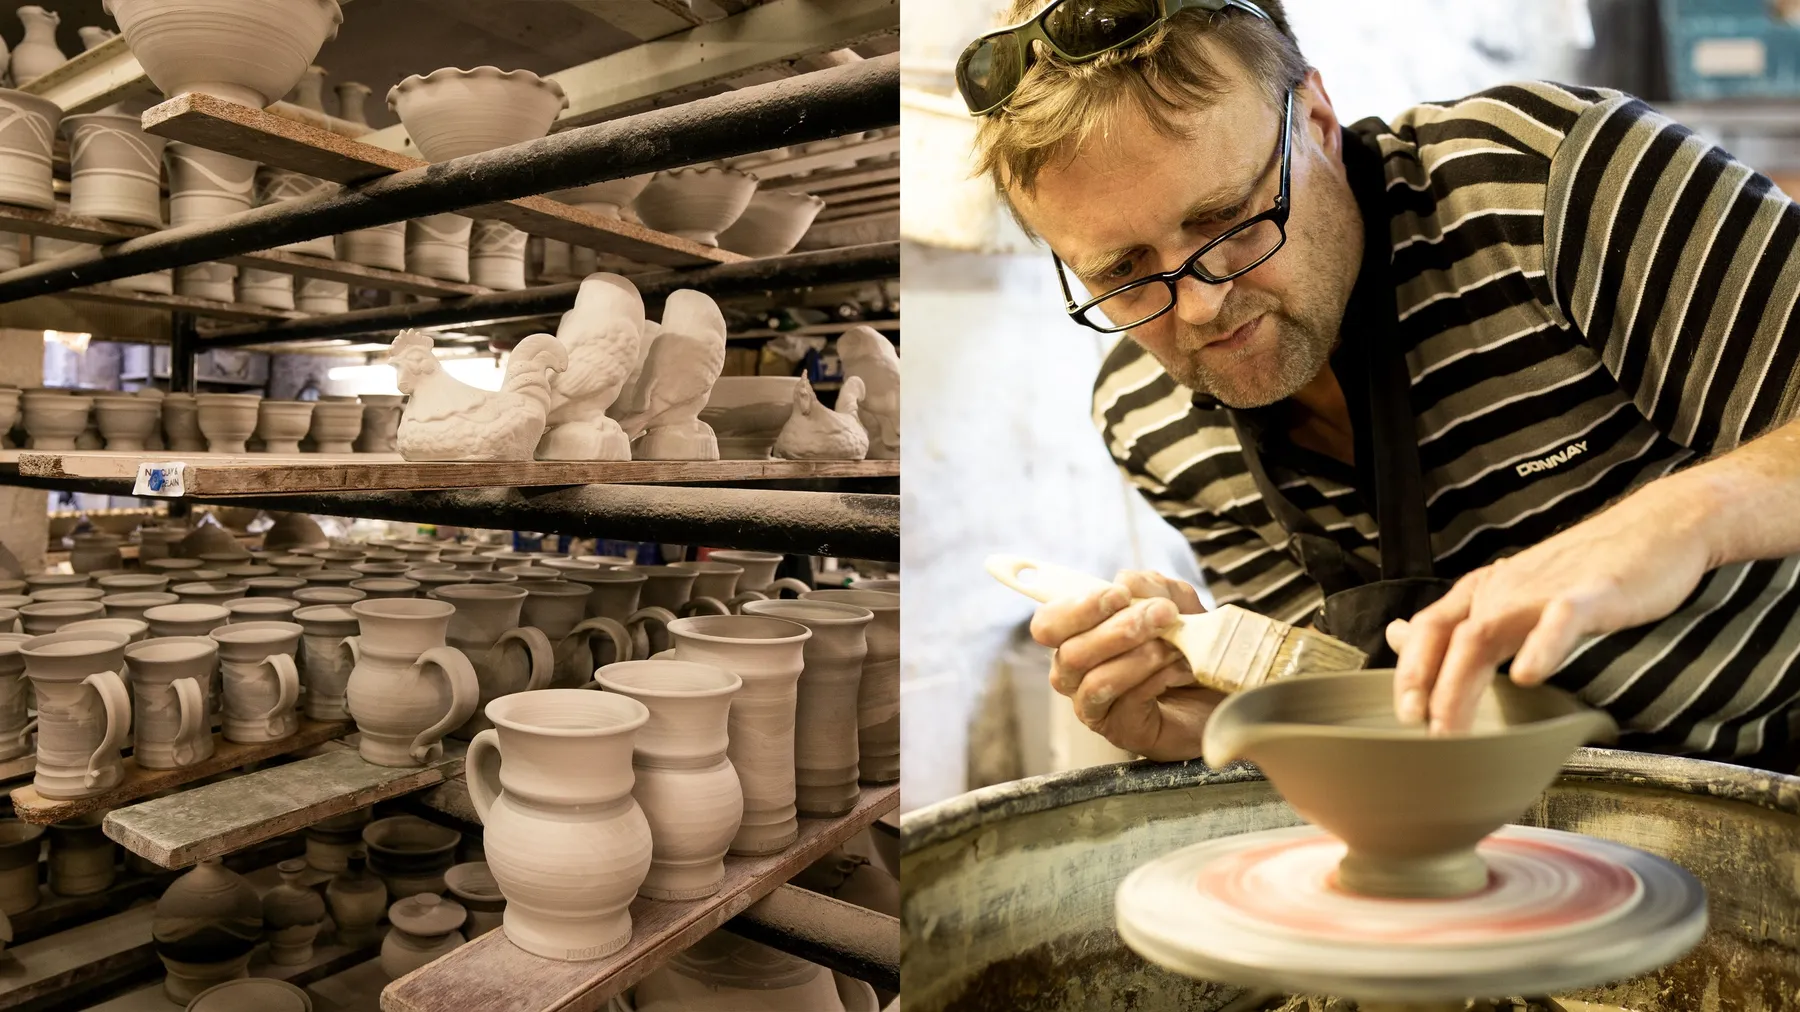 Dick's son Dan has taken the Ingleton Pottery name around the world with his YouTube tutorials